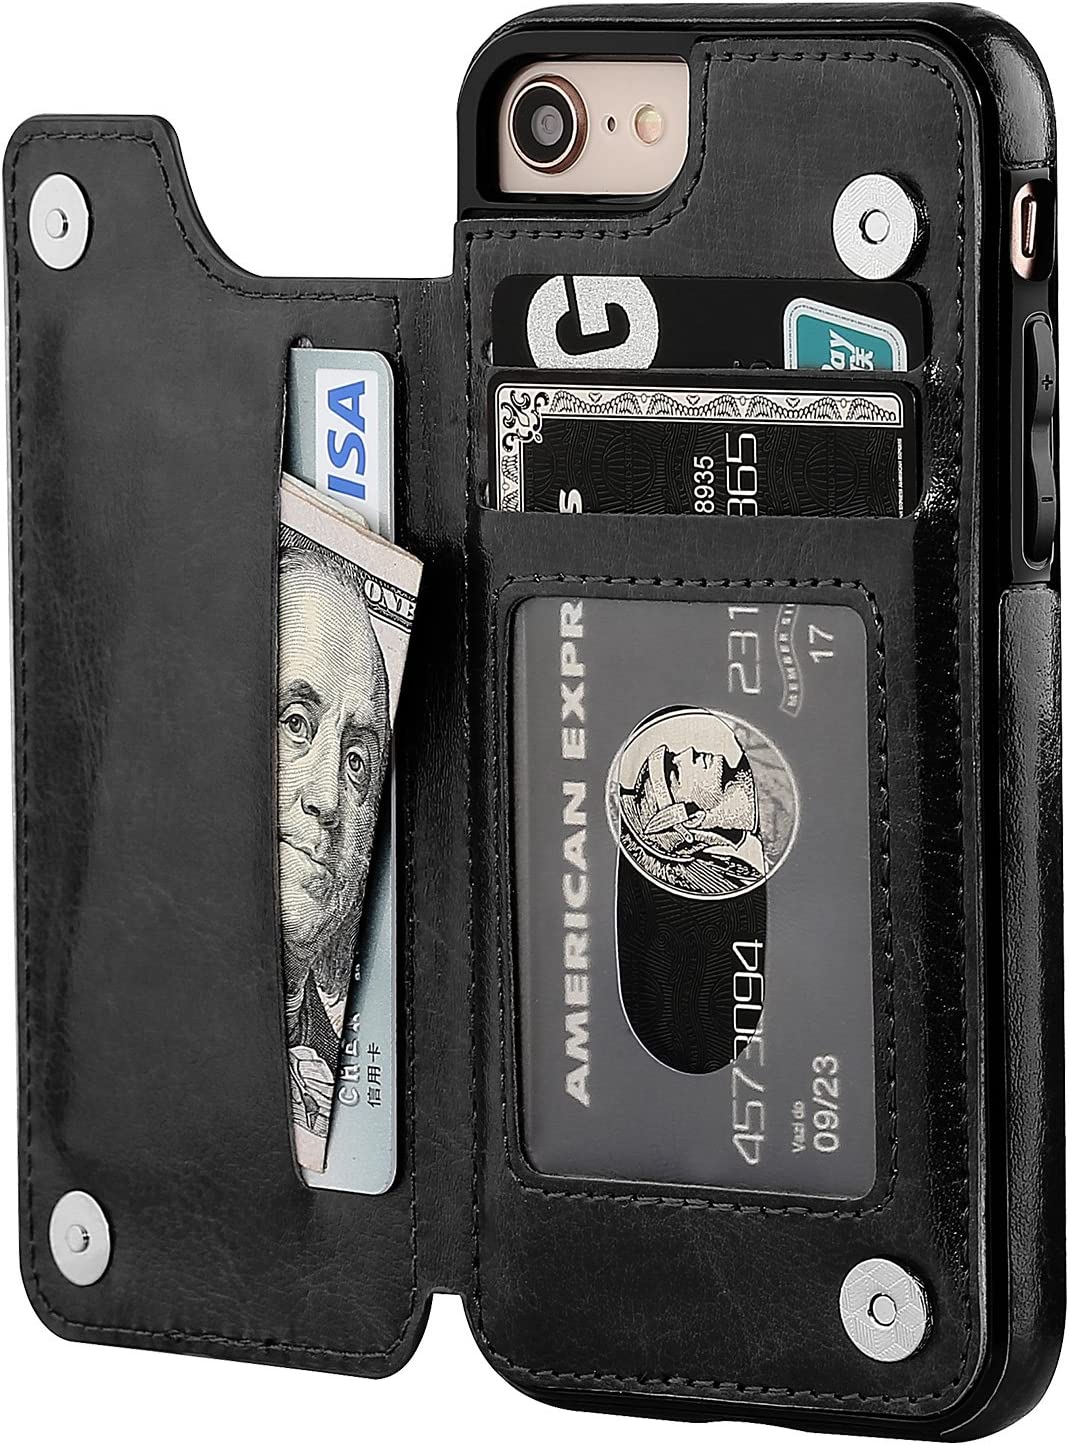 Best iPhone 8 Cardholder Cases